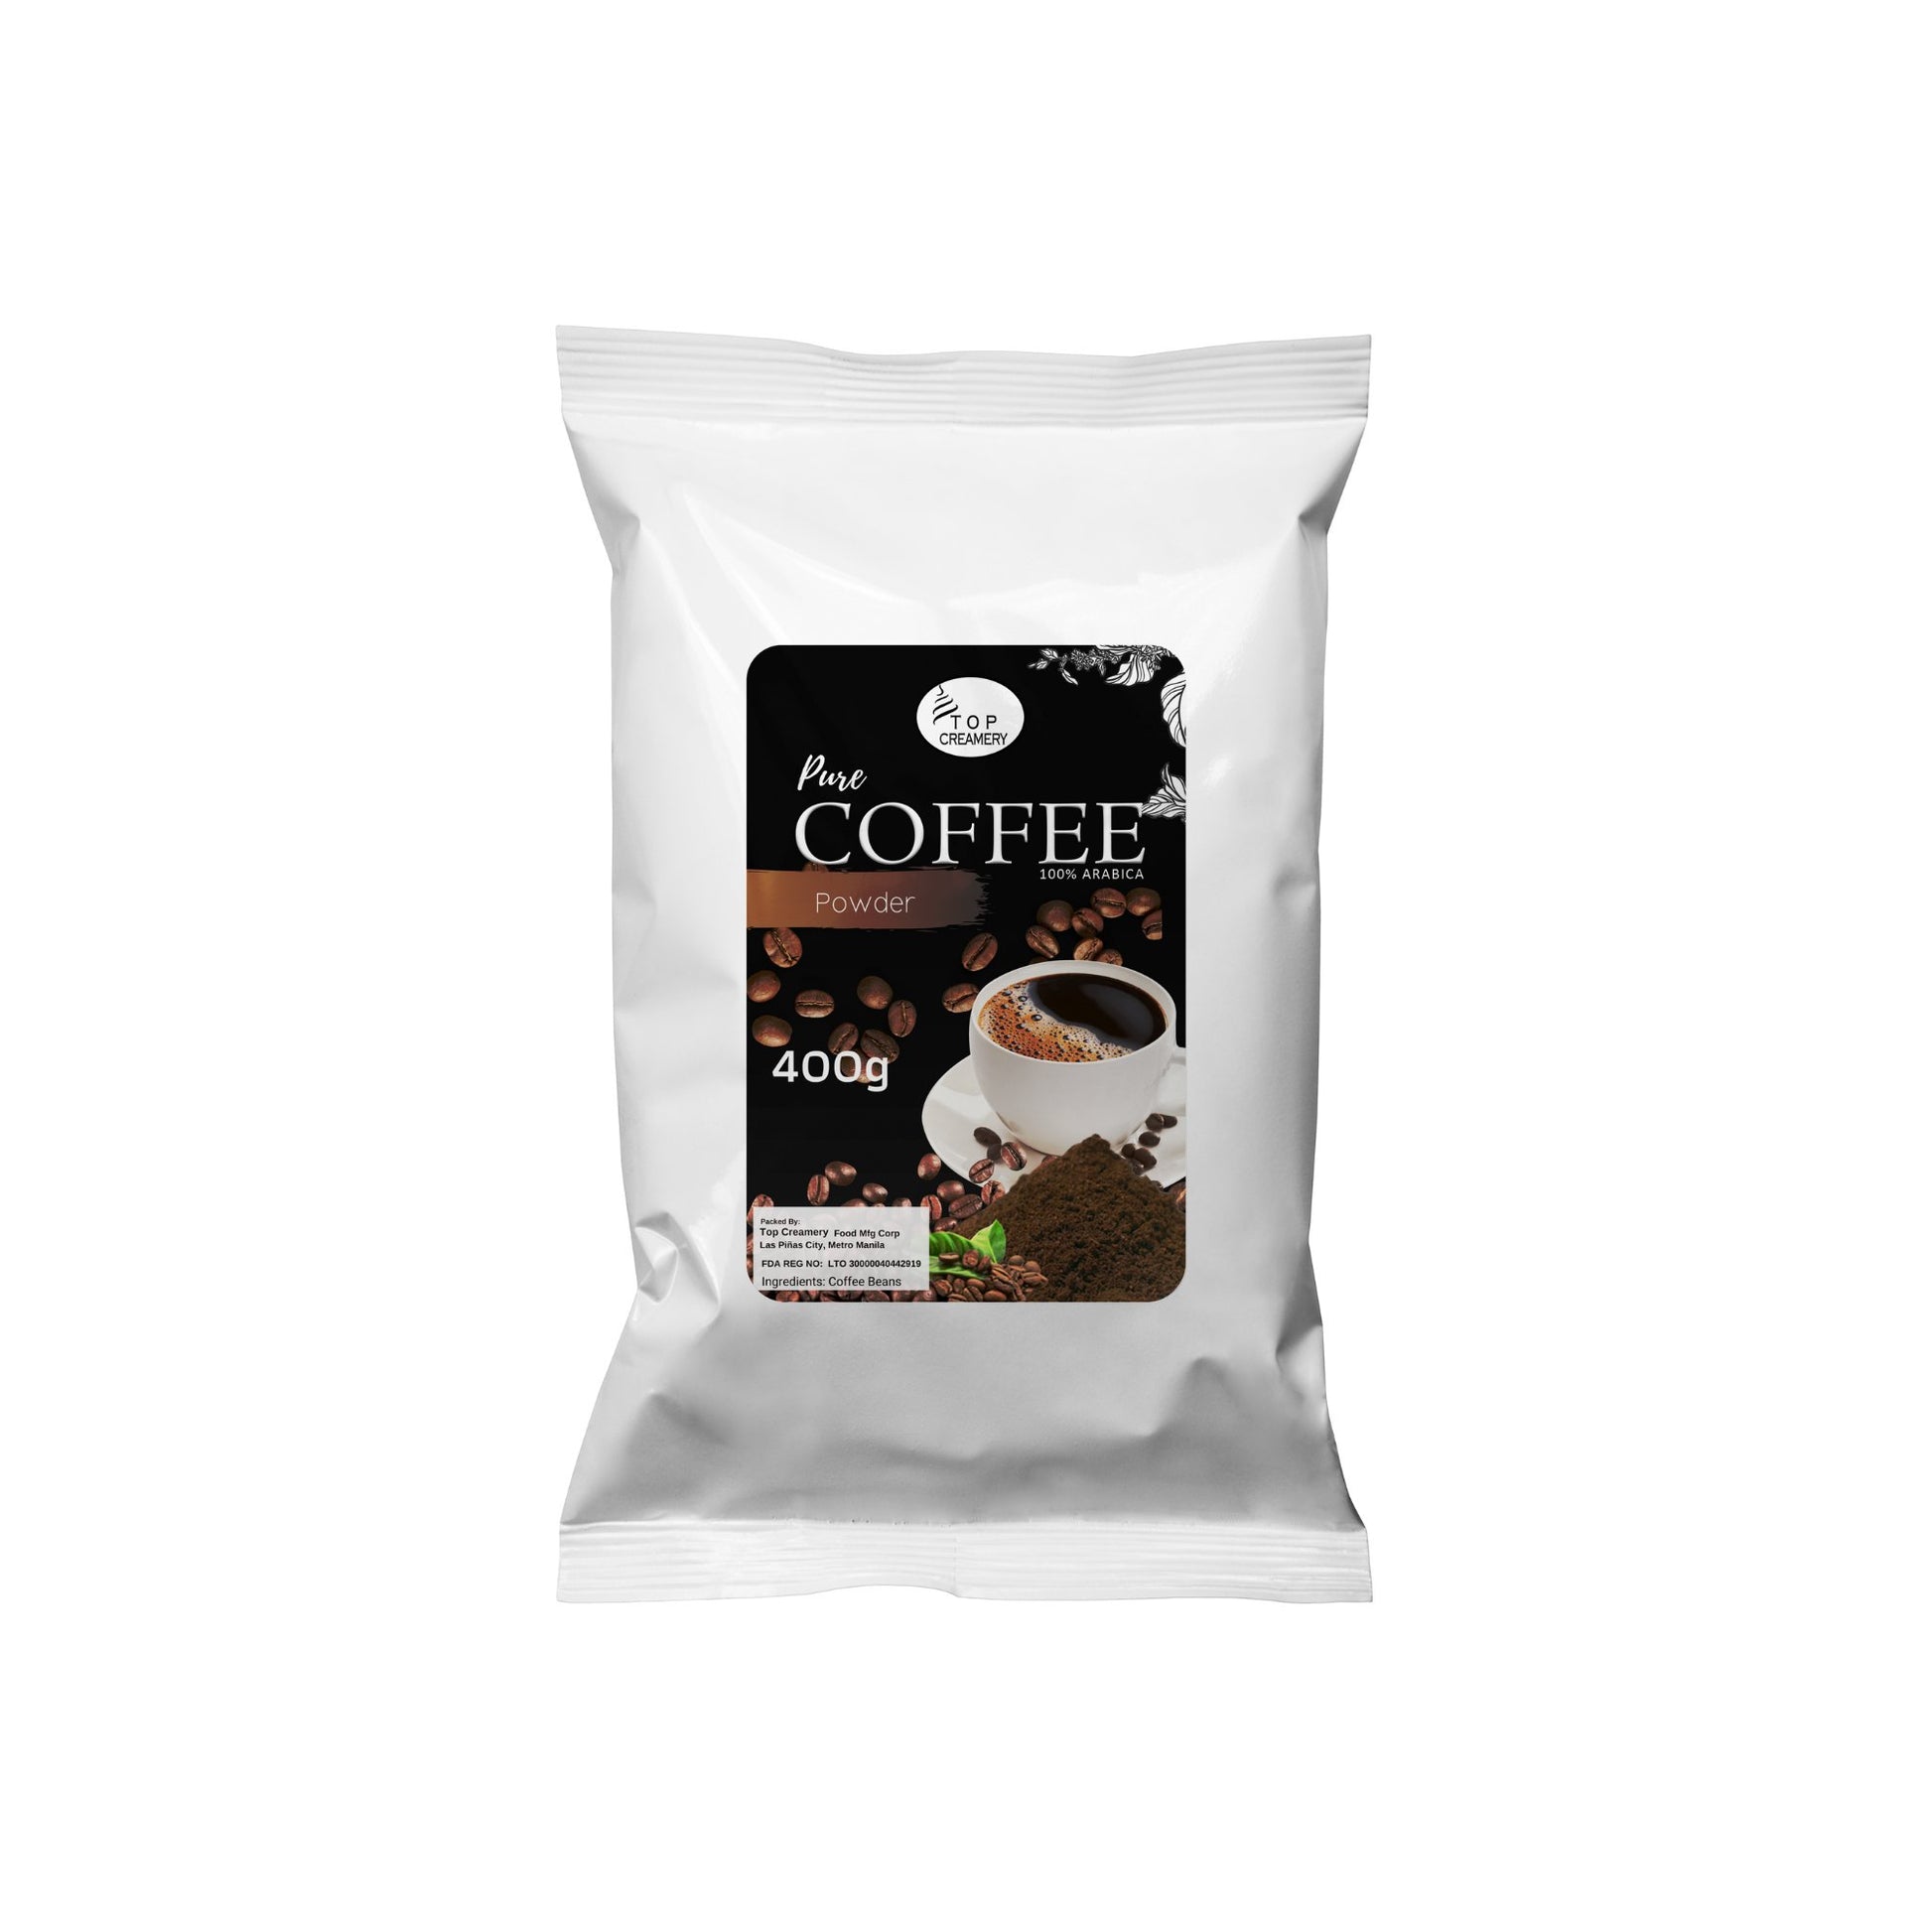 TOP Creamery Pure Coffee Powder 400g - Kreme City Supplies